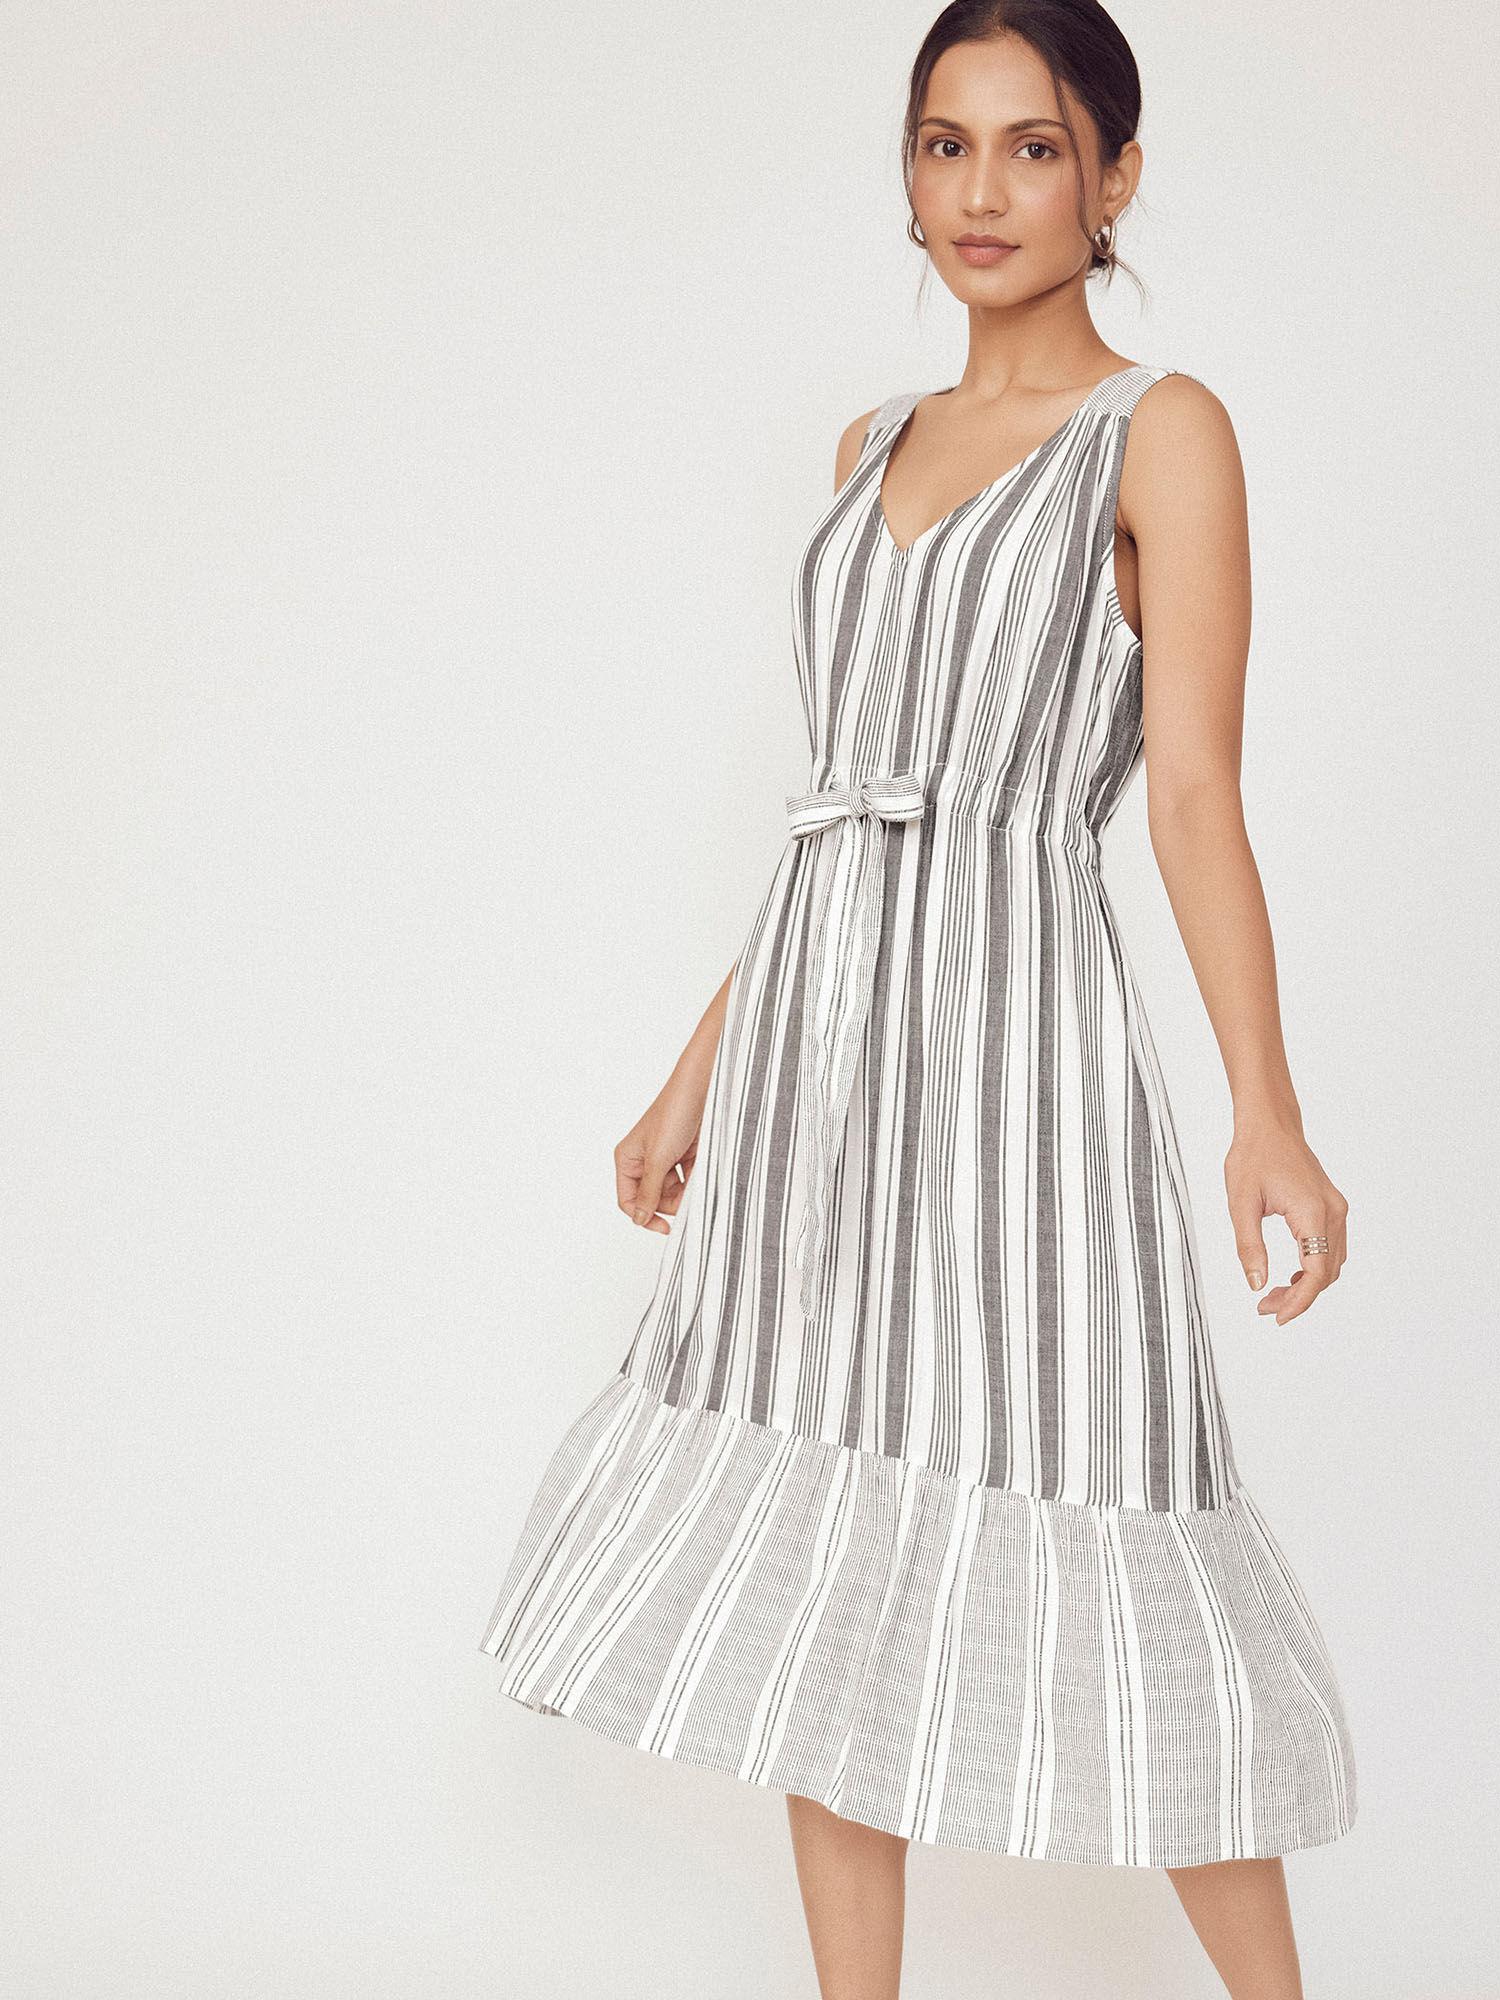 monochrome-striped-front-tie-dress-white